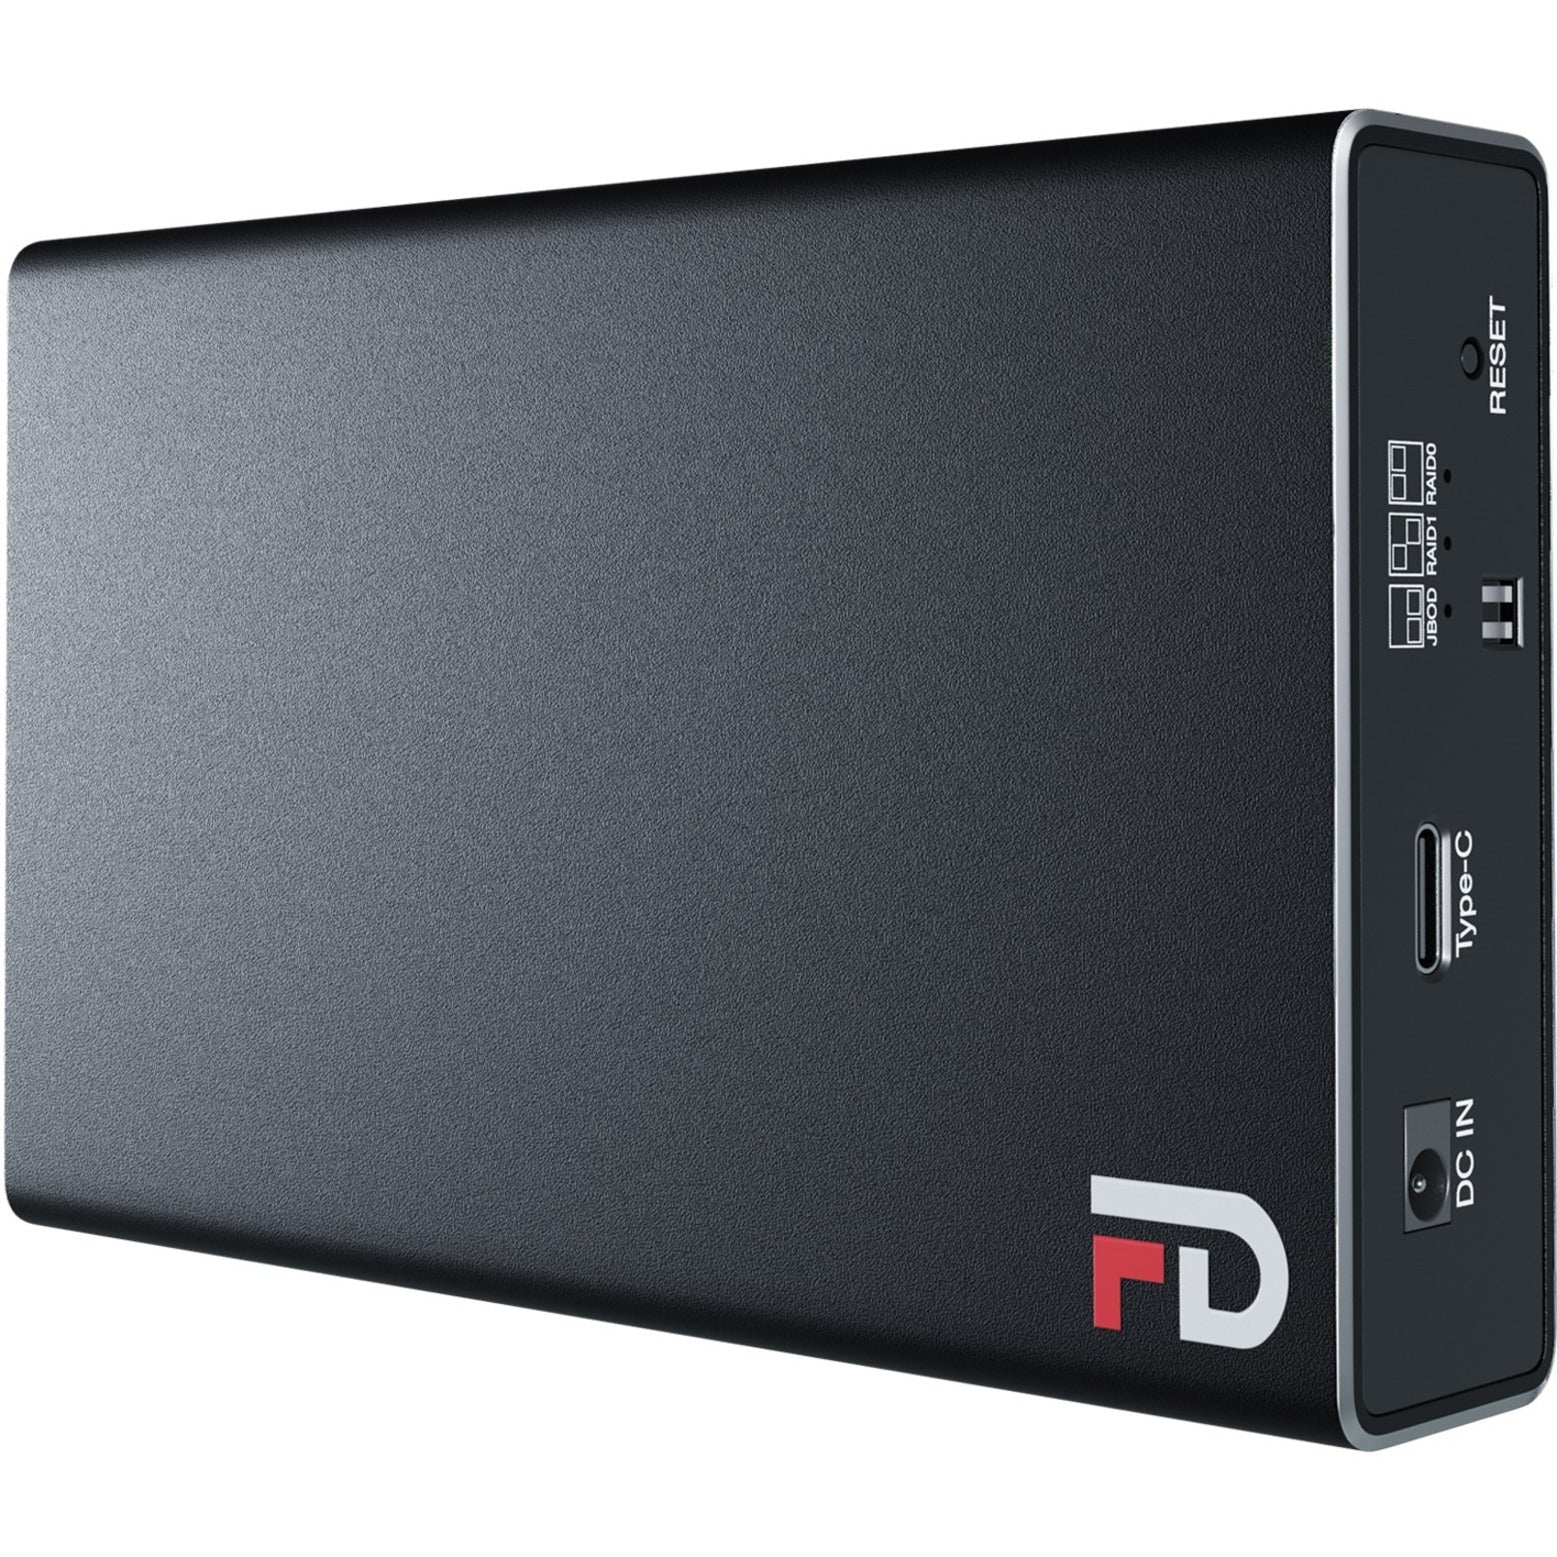 Fantom Drives DMR000E DUO - Portable 2 Bay SSD RAID Enclosure - USB 3.2 Gen 2 Type-C - Black, 2 Bay RAID Enclosure with USB 3.1 Gen 2 Type C Interface